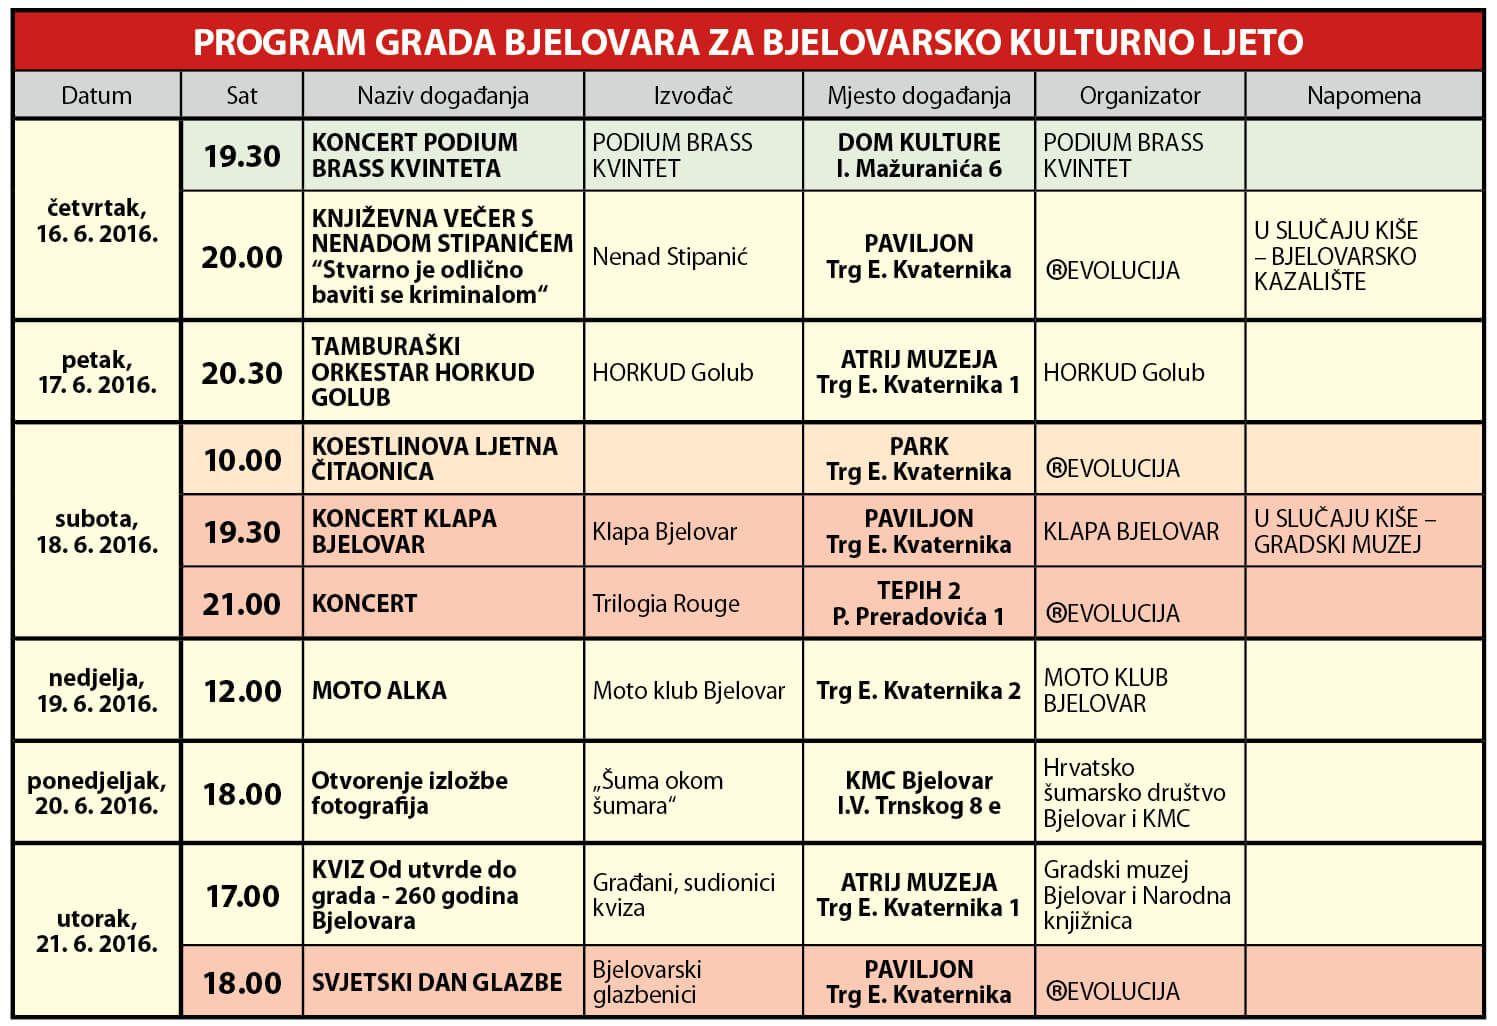 Program grada Bjelovara za Bjelovarsko kulturno ljeto